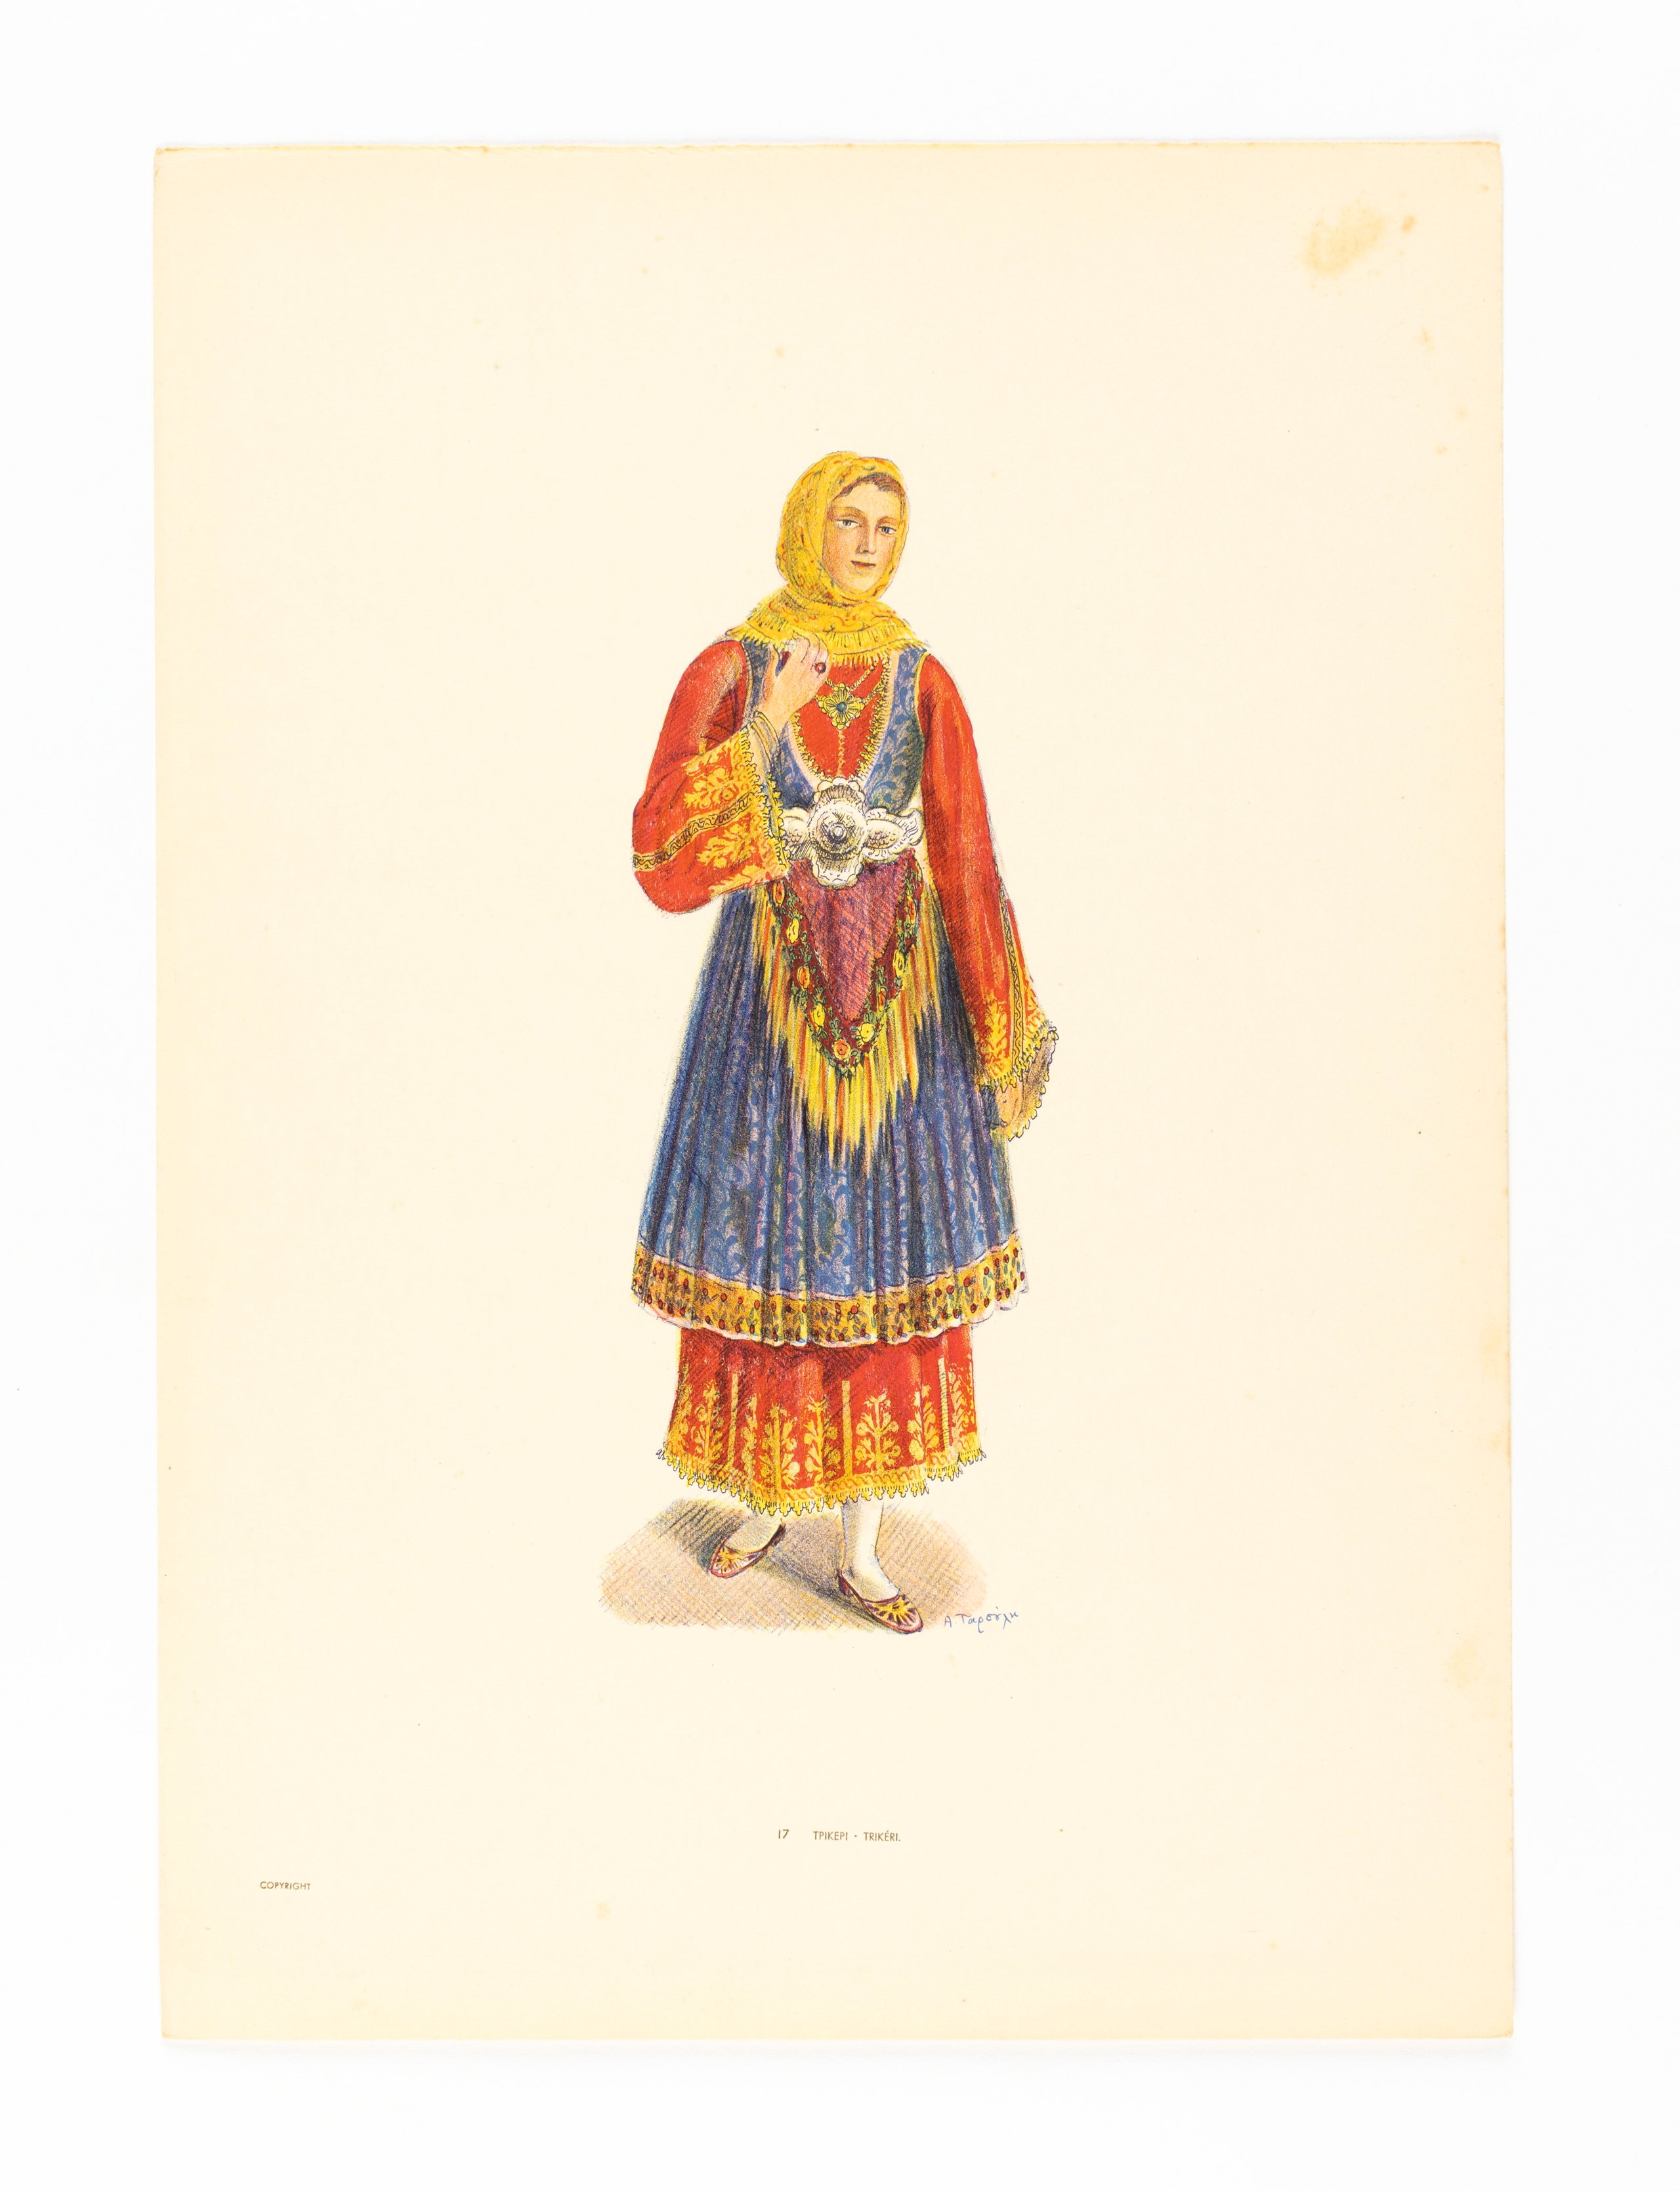 Lithograph of Greek regional costume